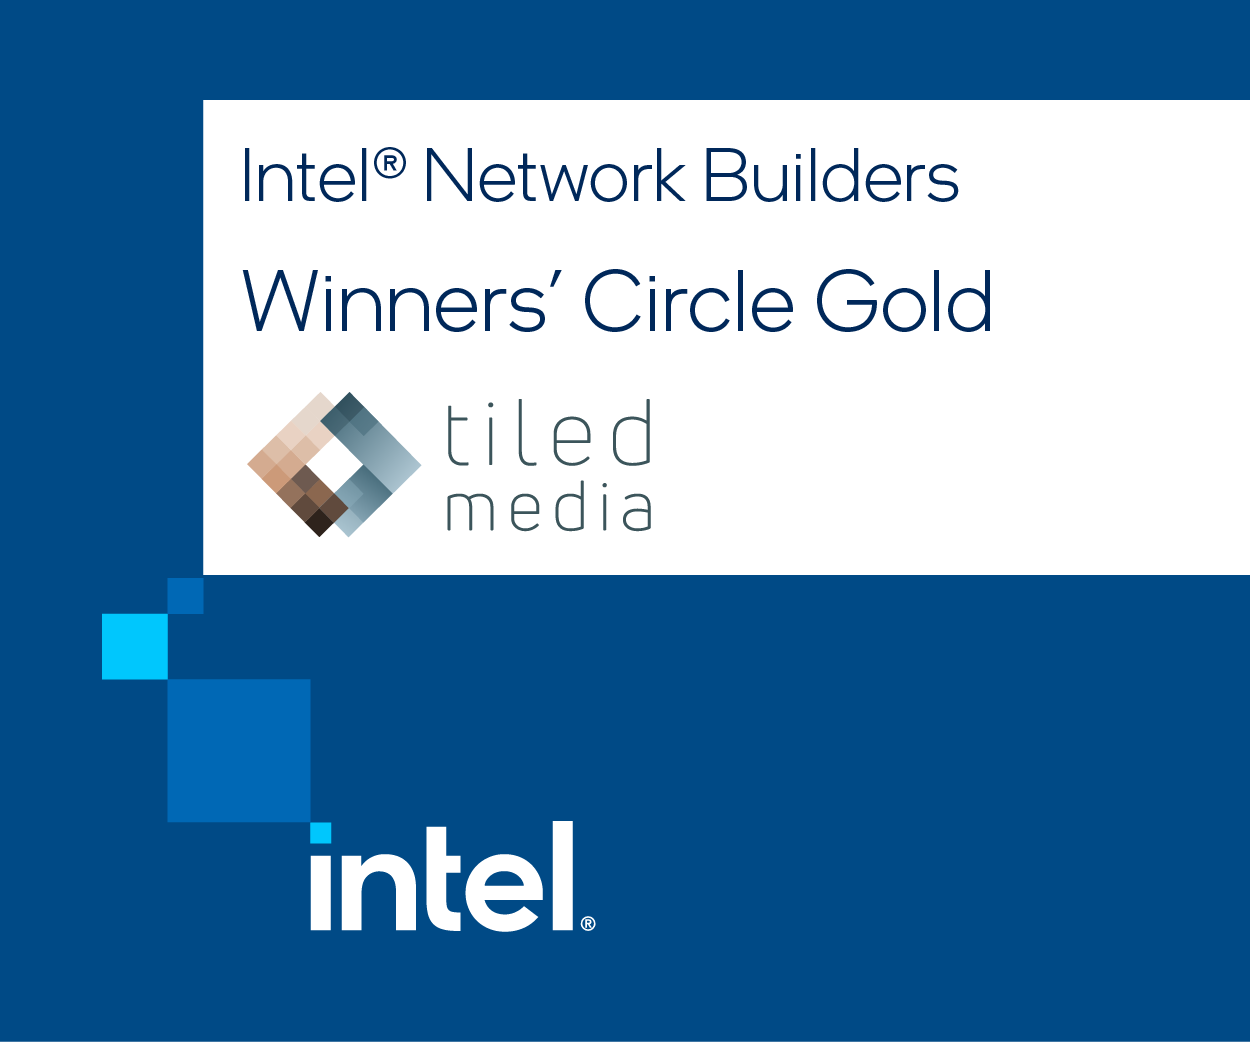 Intel's Winners' Circle